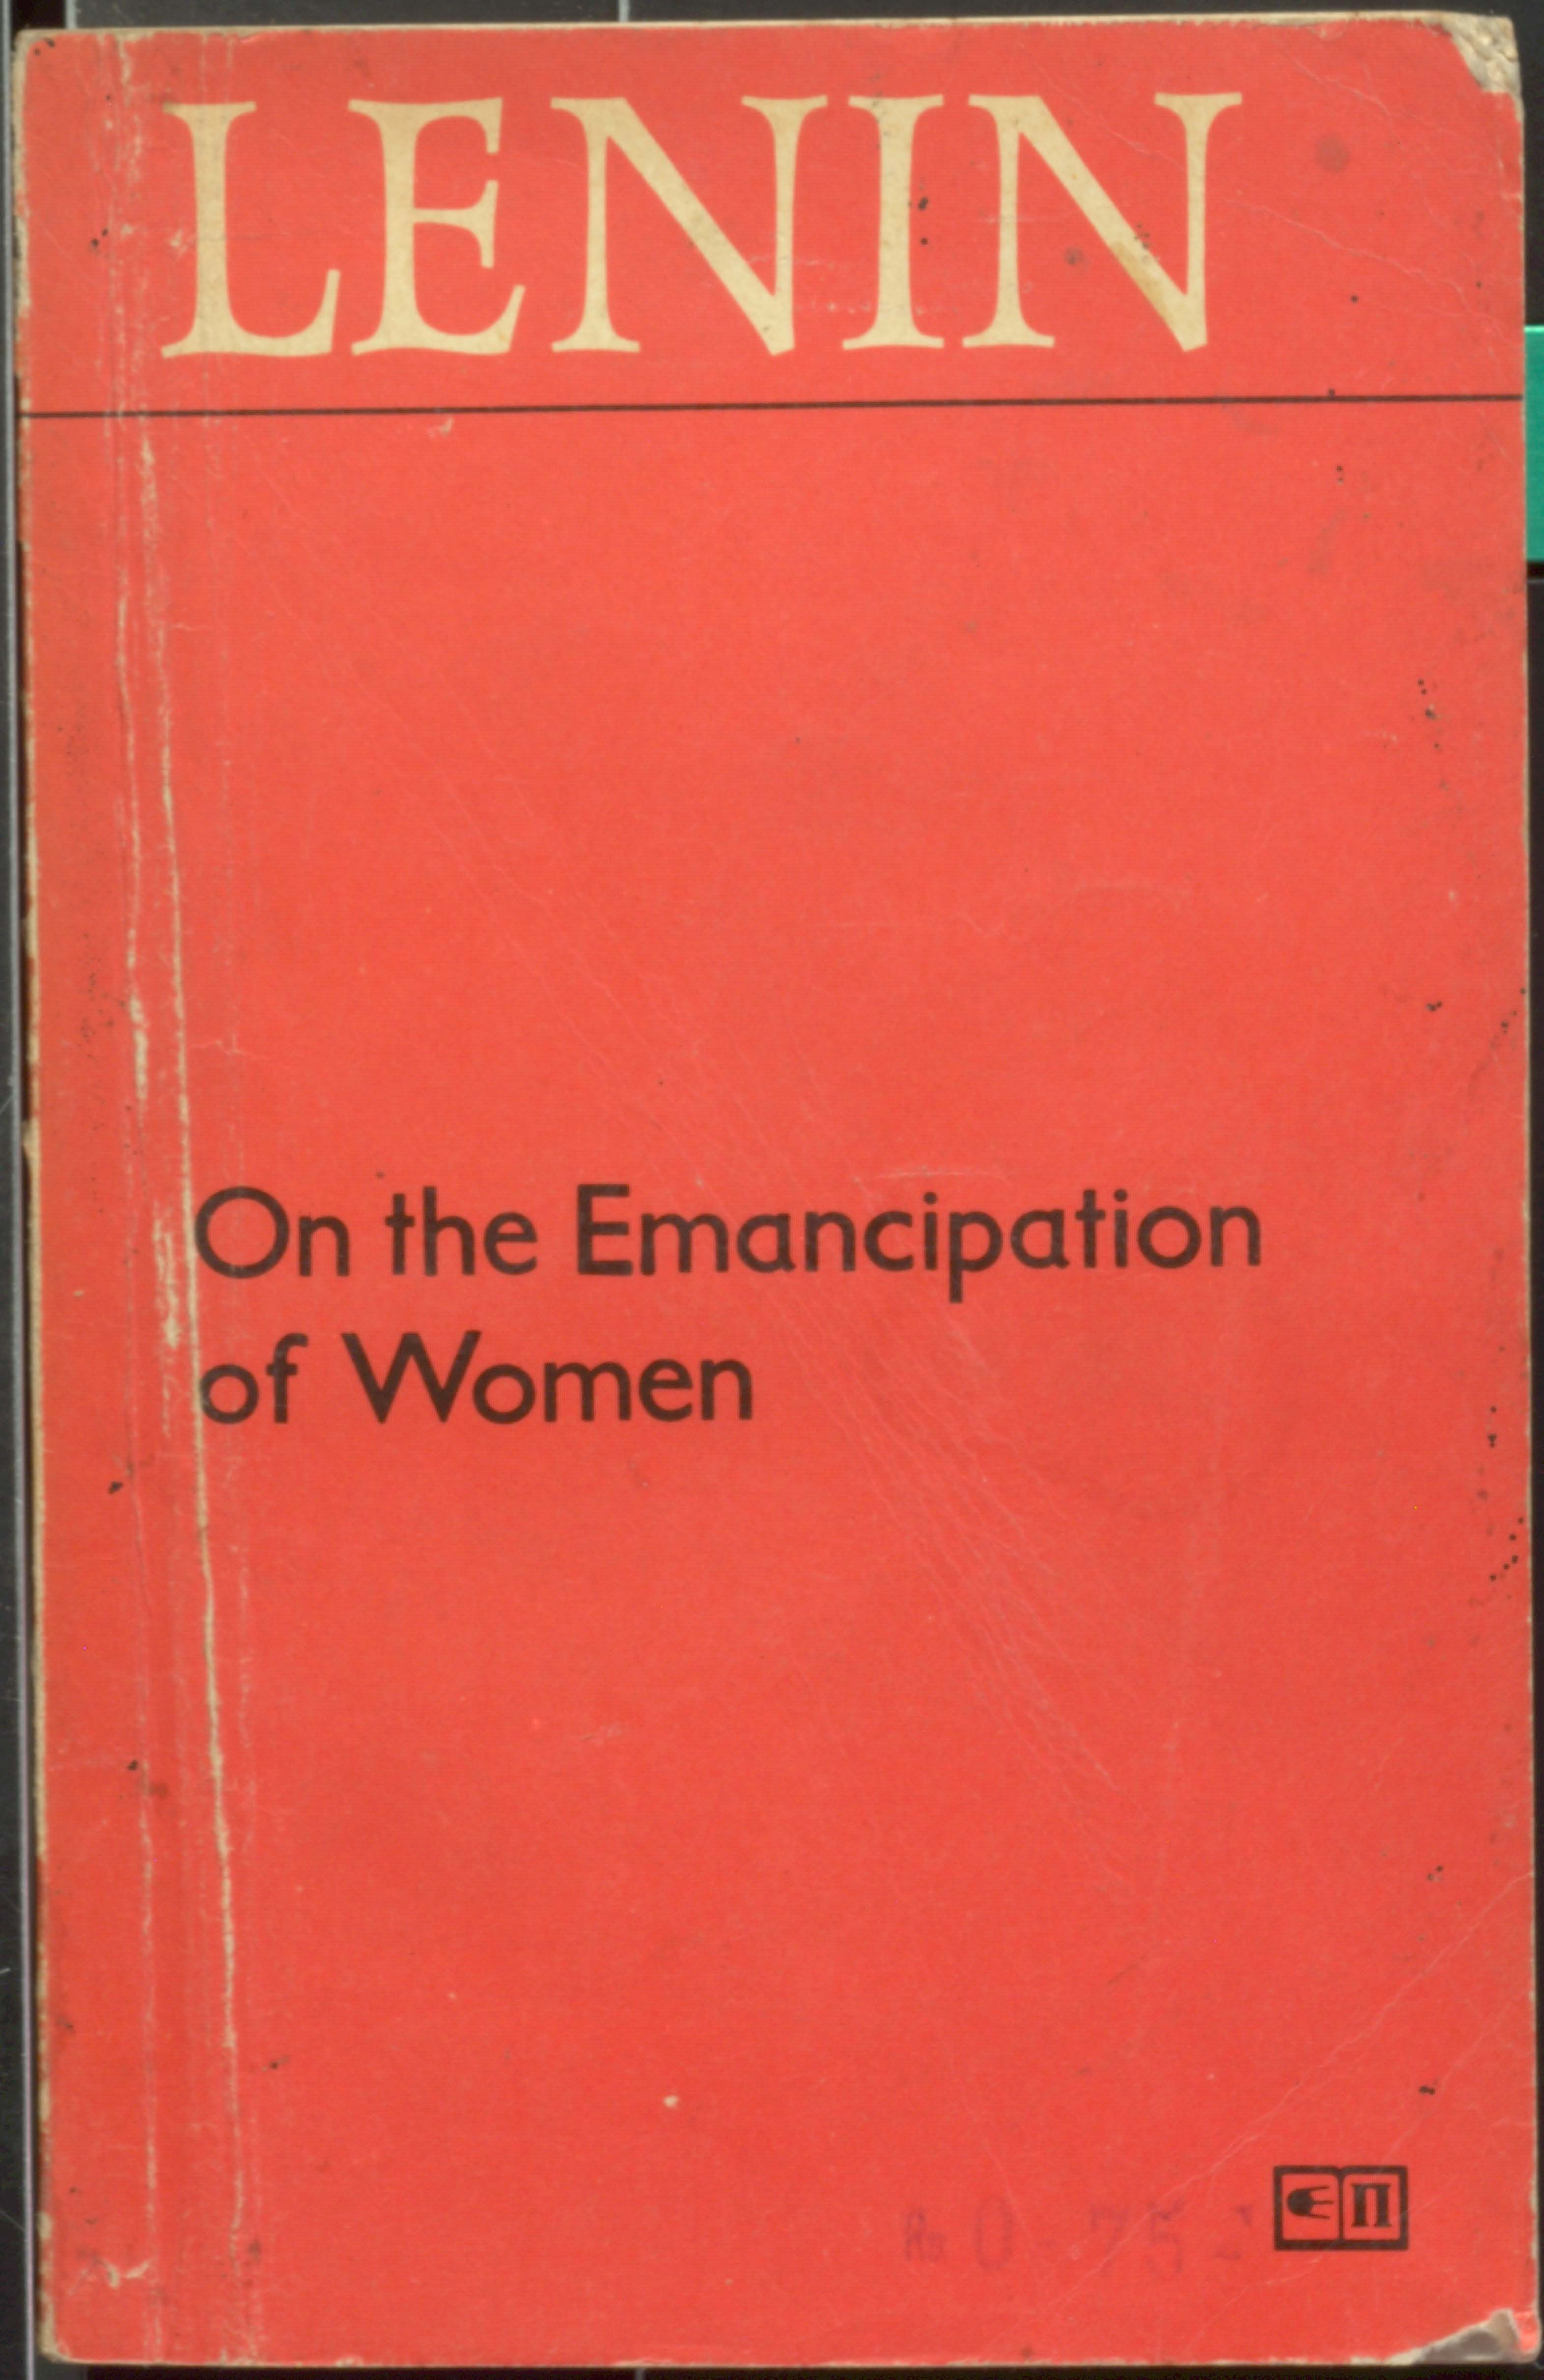 Lenin on the emancipation off women